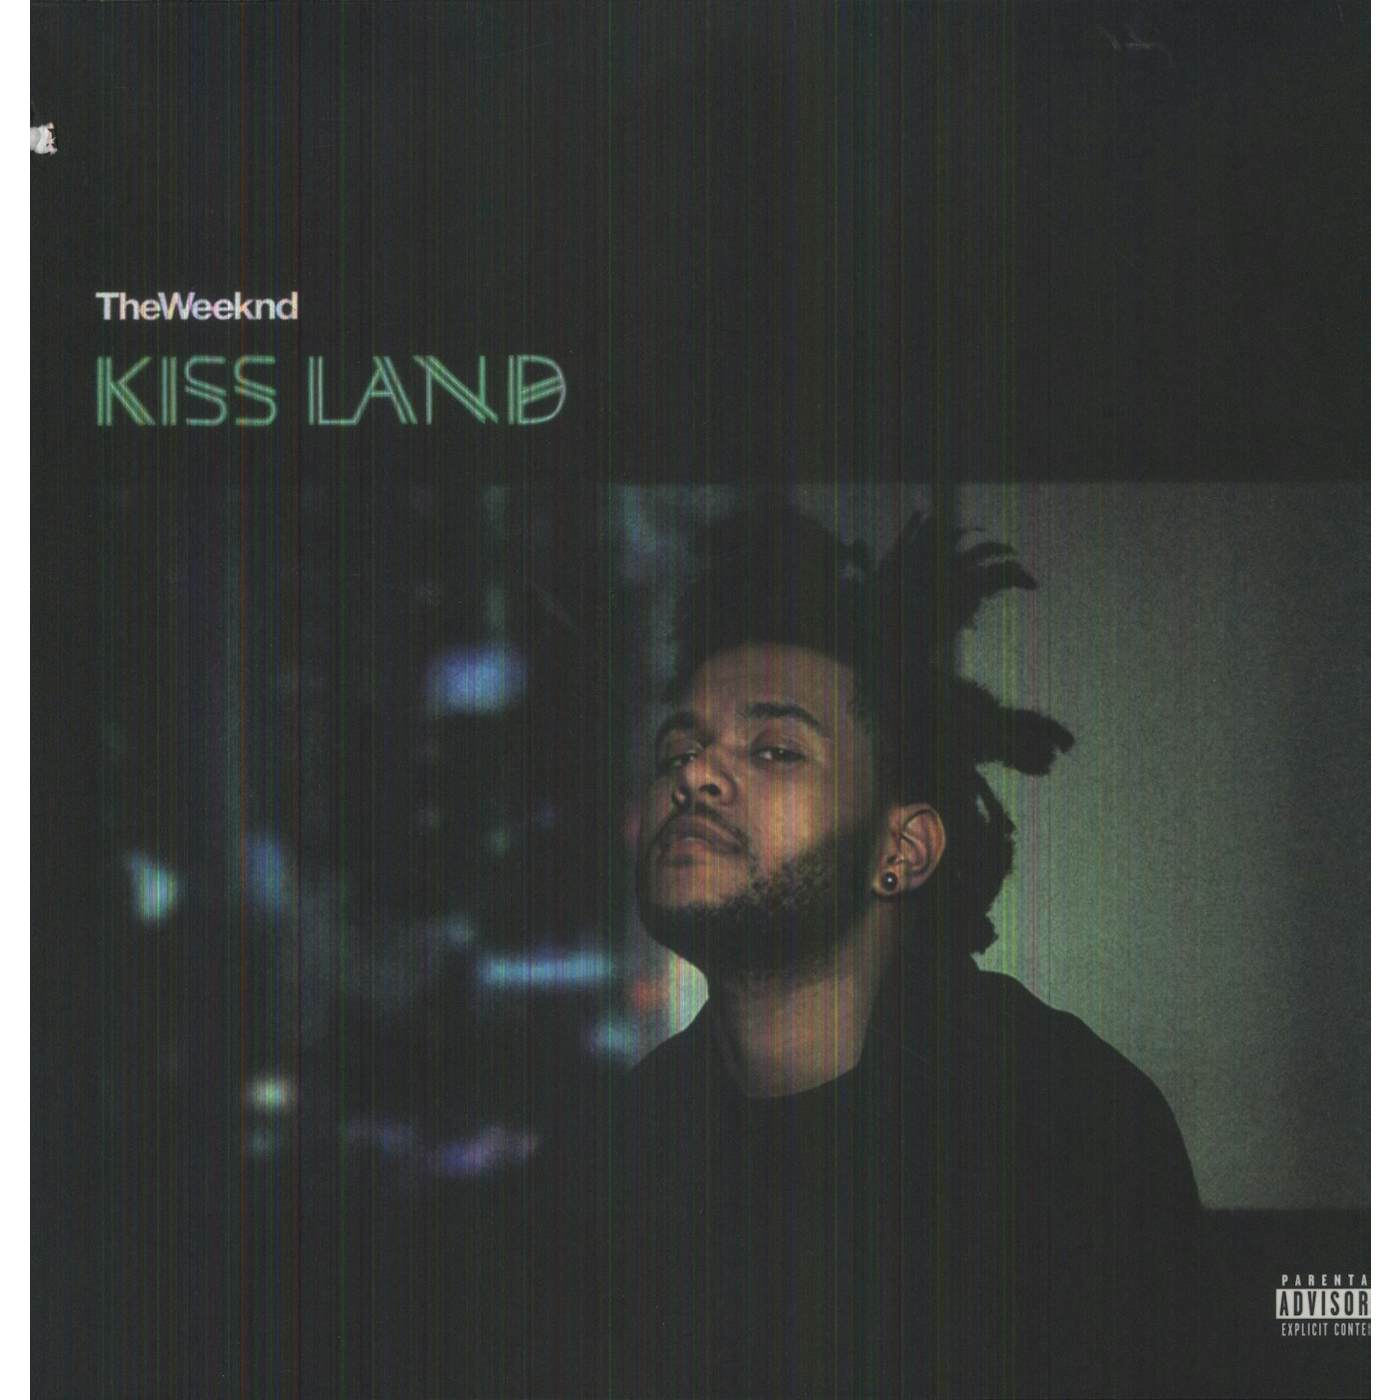 The Weeknd Kiss Land Vinyl Record